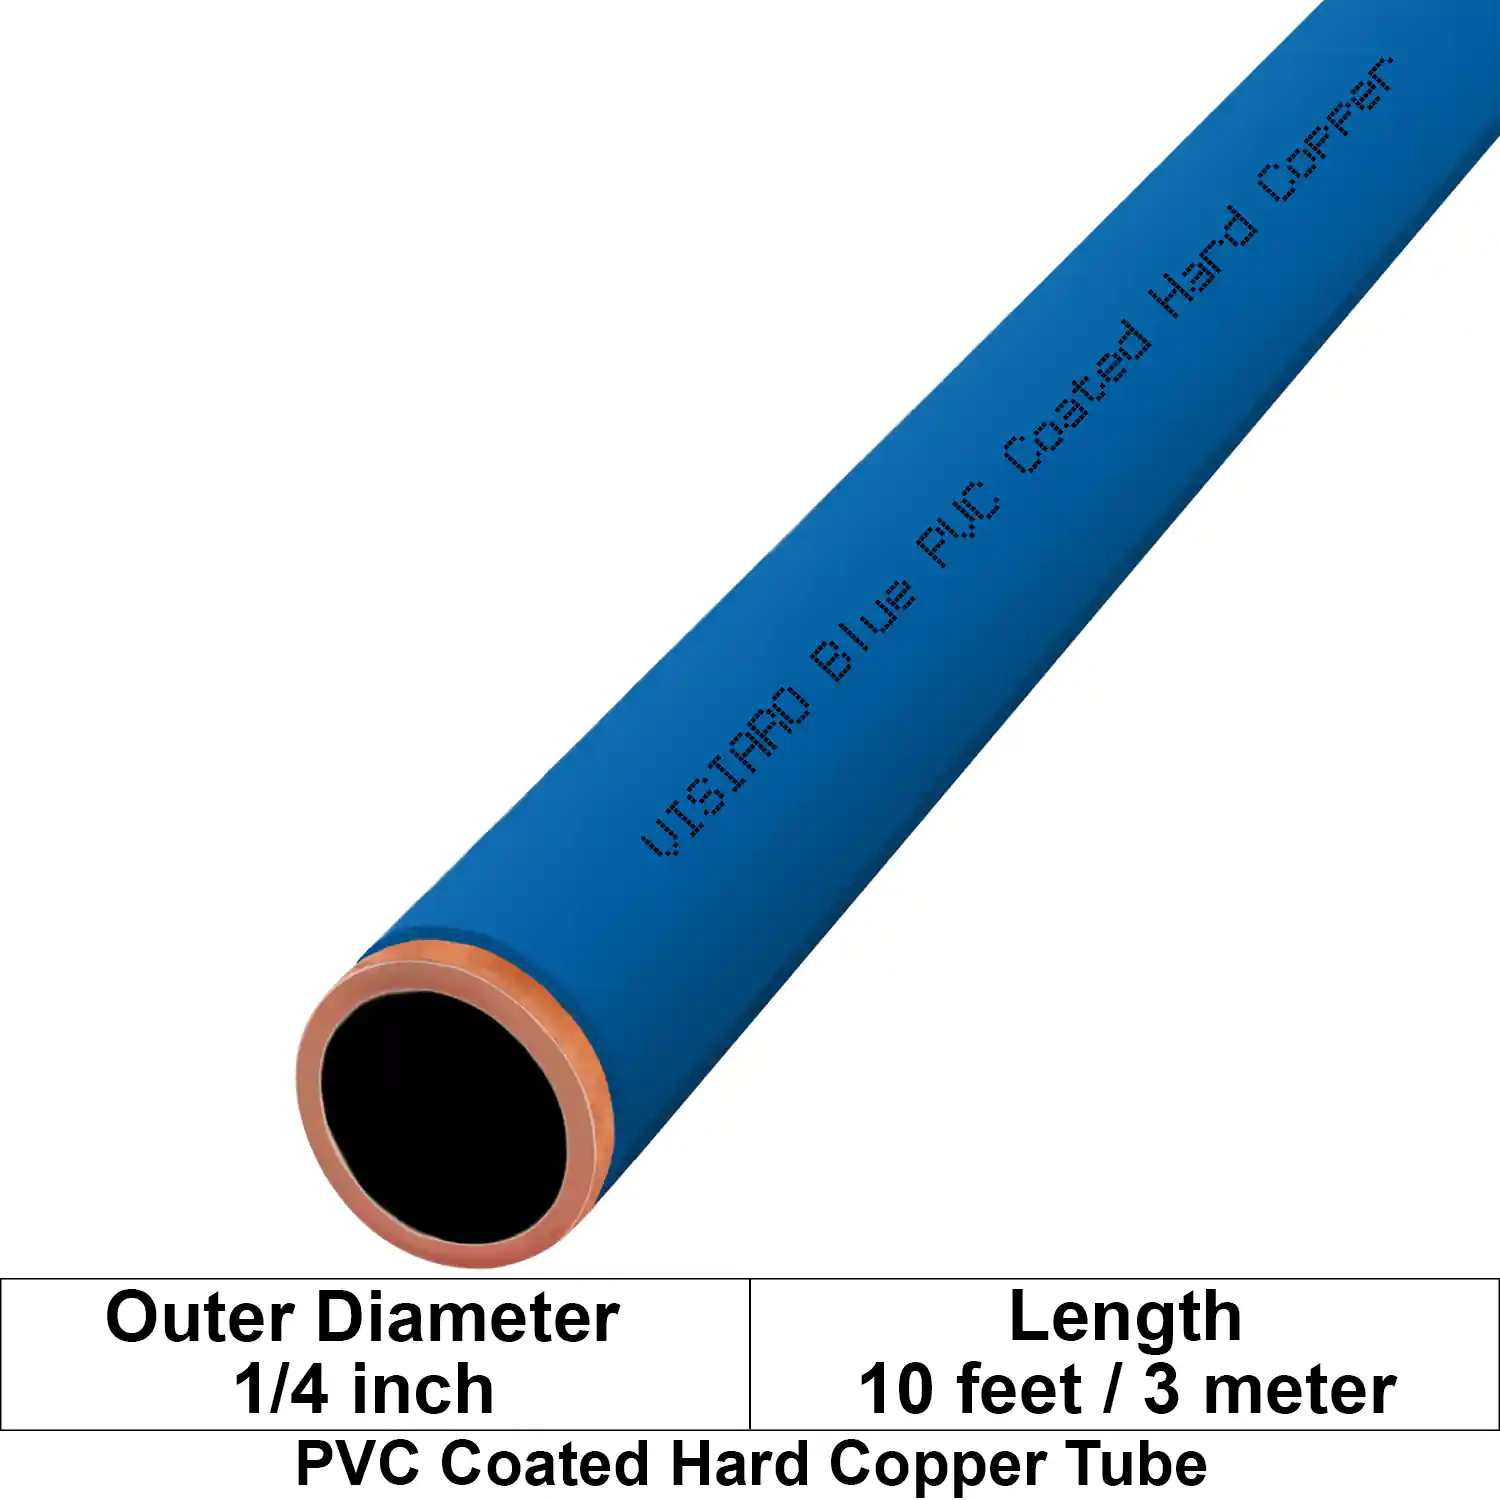 Visiaro Blue PVC Coated Hard Copper Tube 10ft long Outer Diameter - 1/4 inch